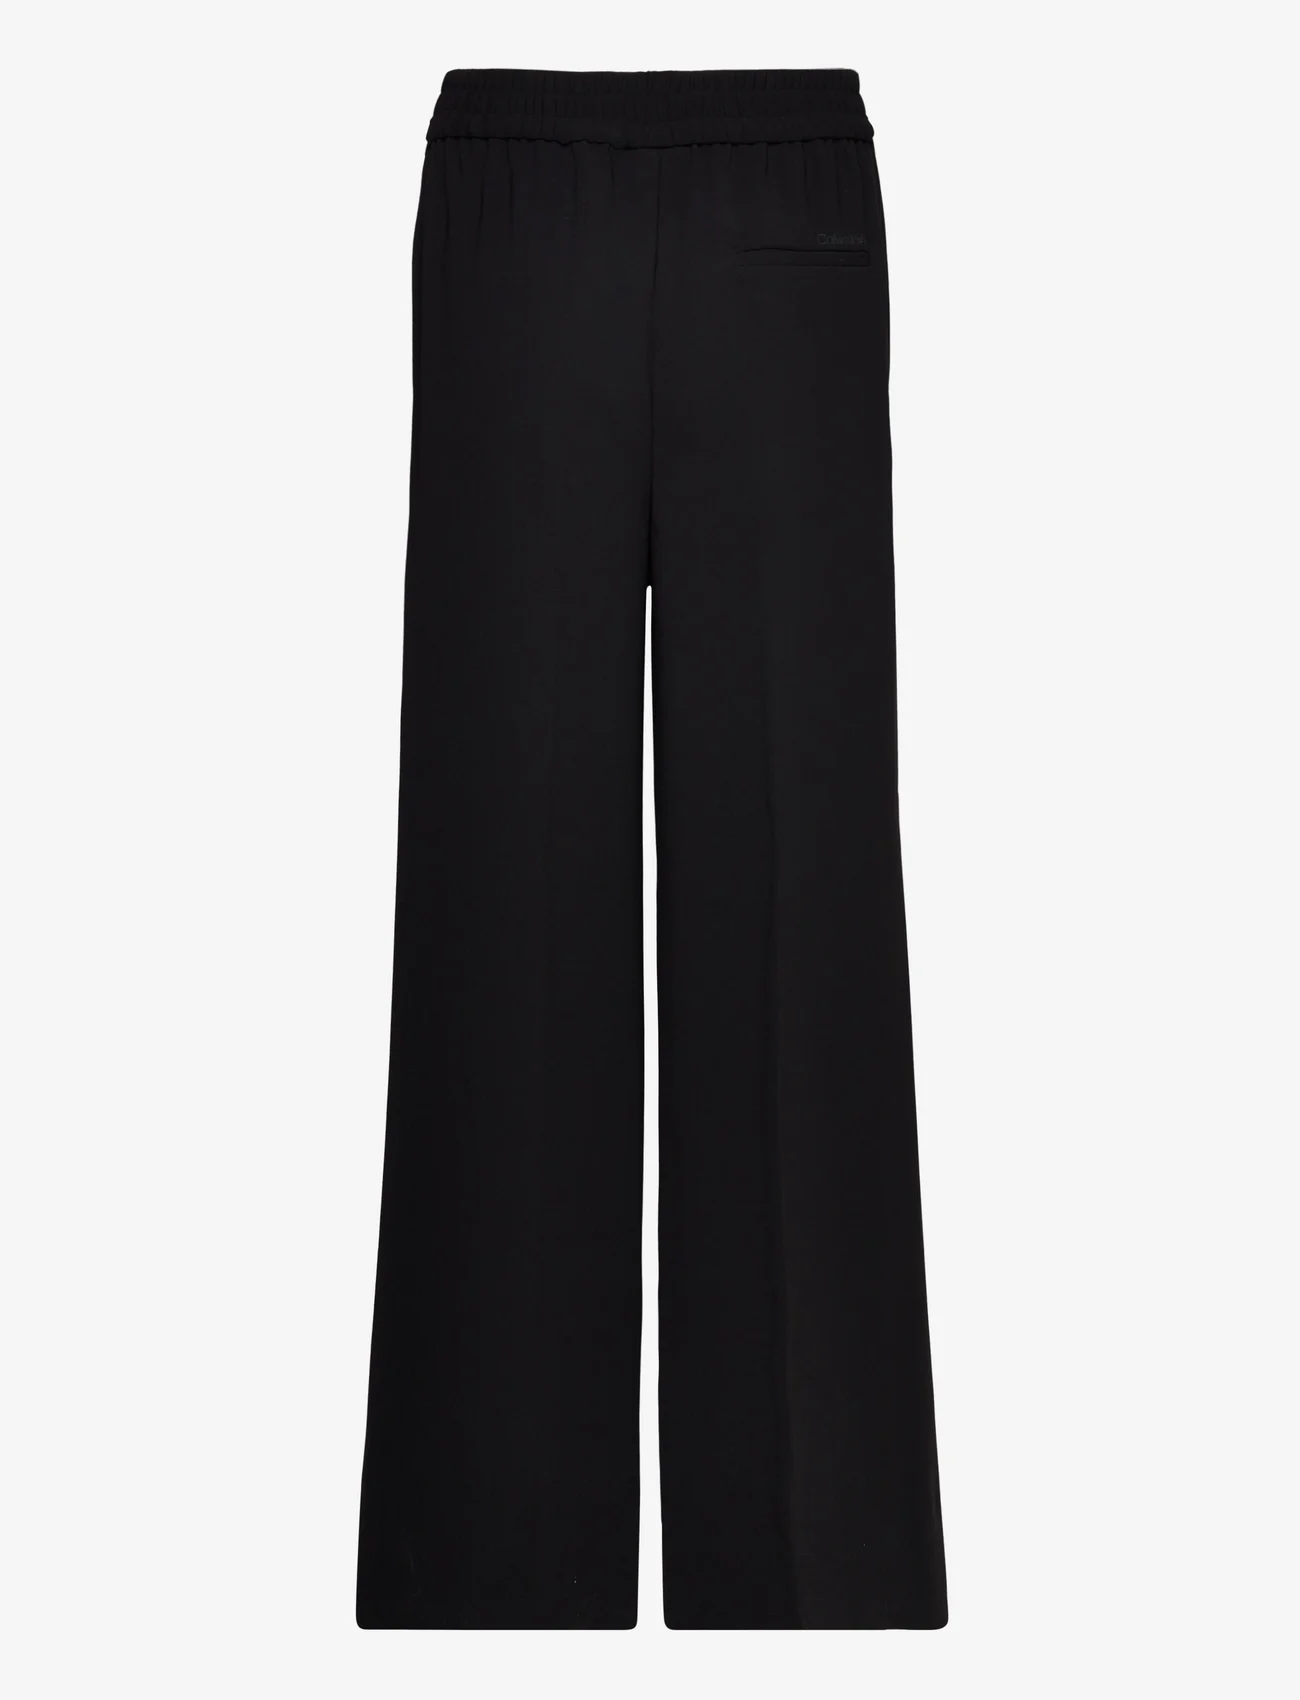 Calvin Klein - STRUCTURE TWILL ELASTIC PANT - vide bukser - ck black - 1